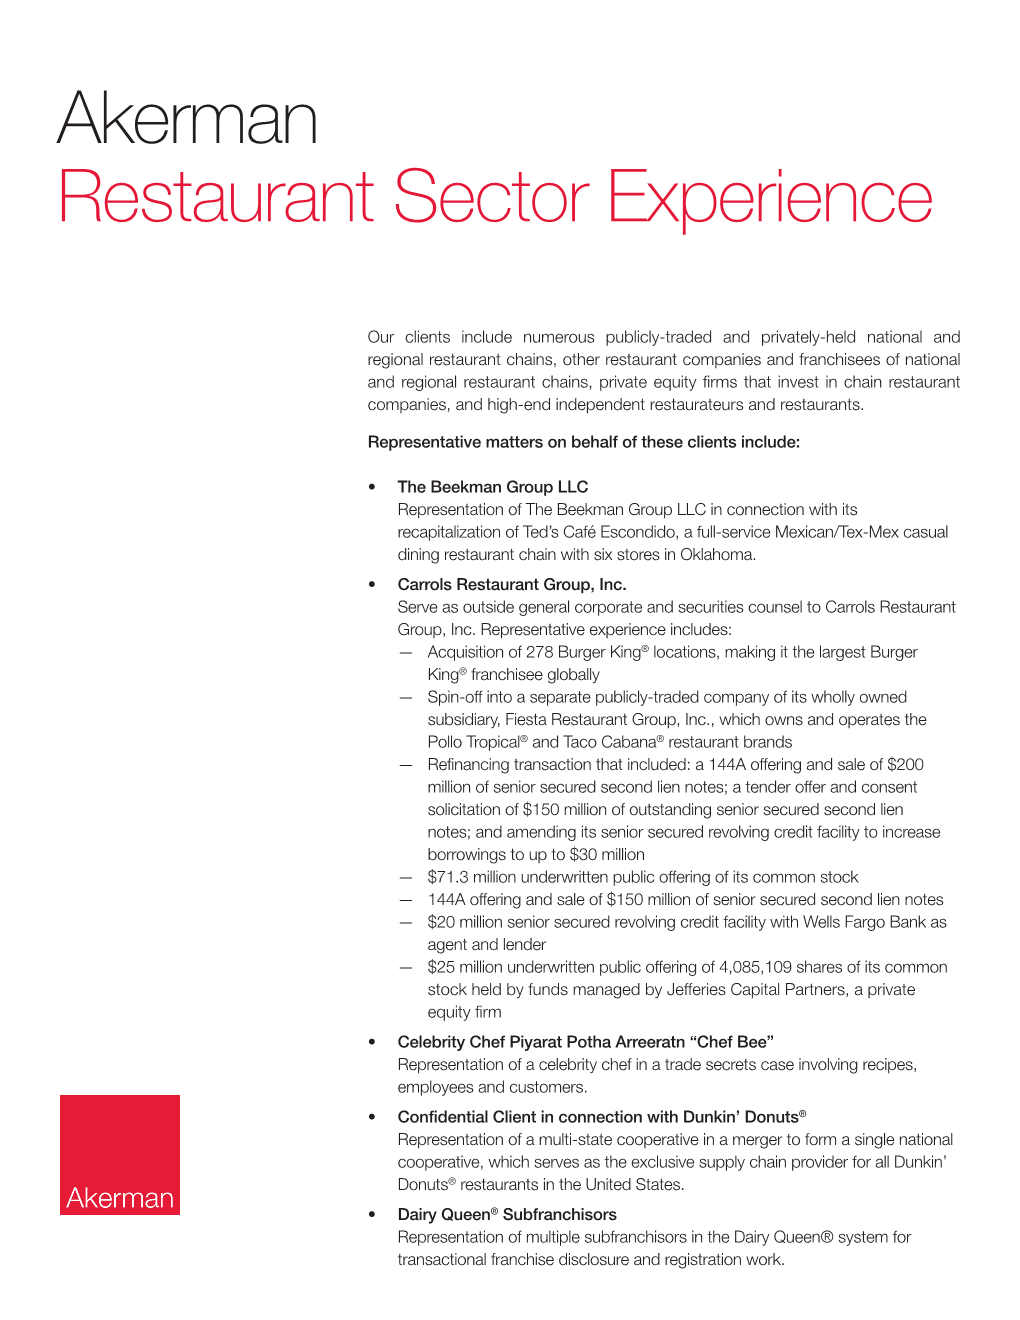 Akerman Restaurant Sector Experience